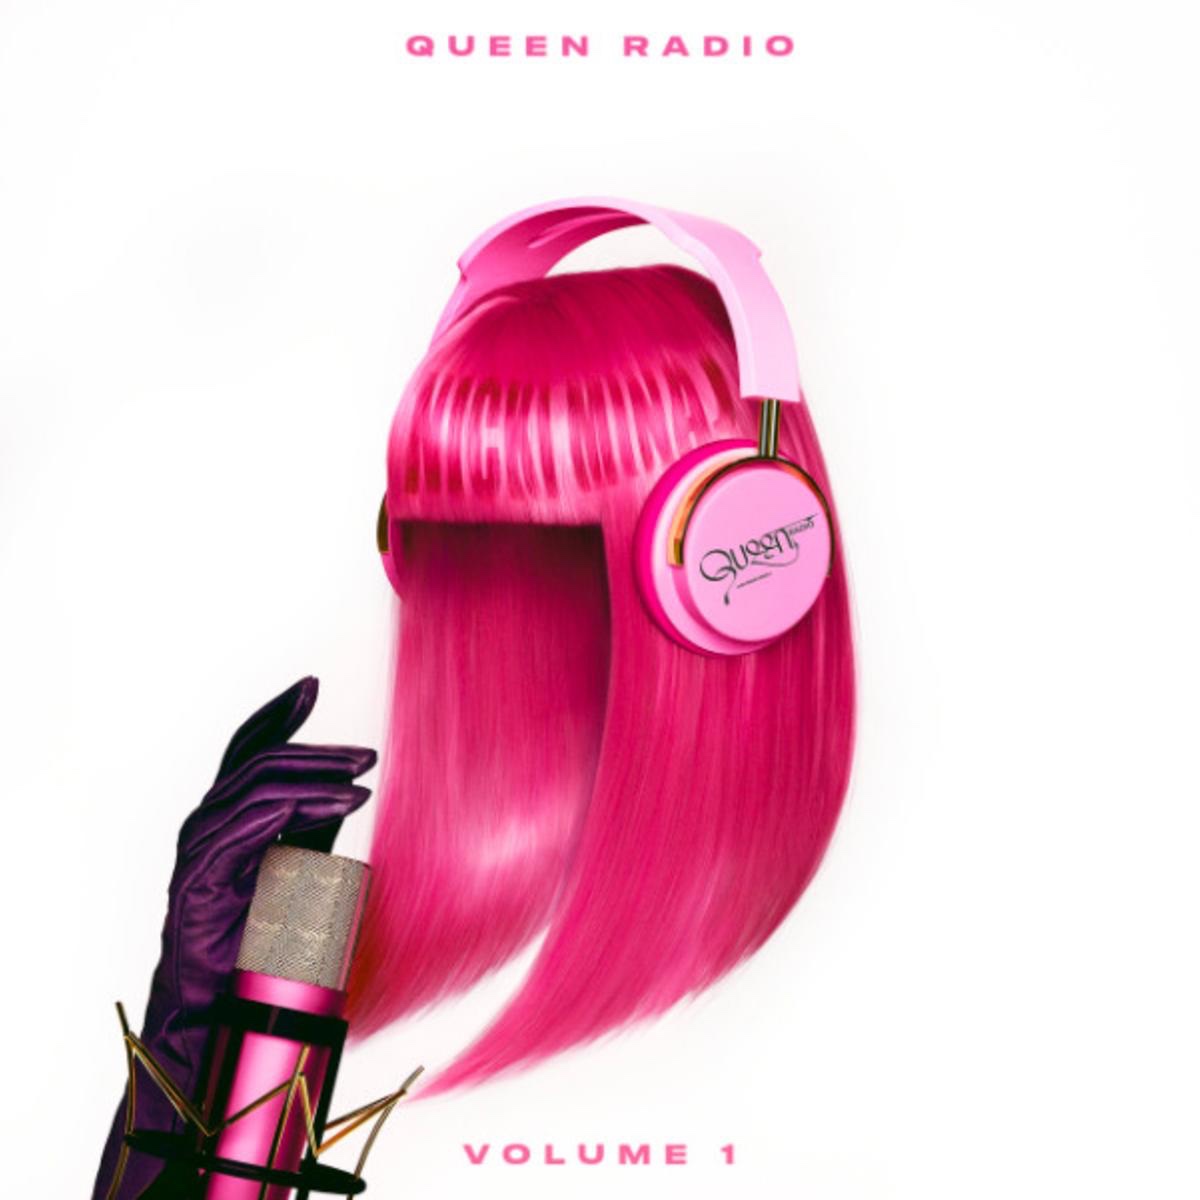 Listen To “Queen Radio Vol. 1” By Nicki Minaj